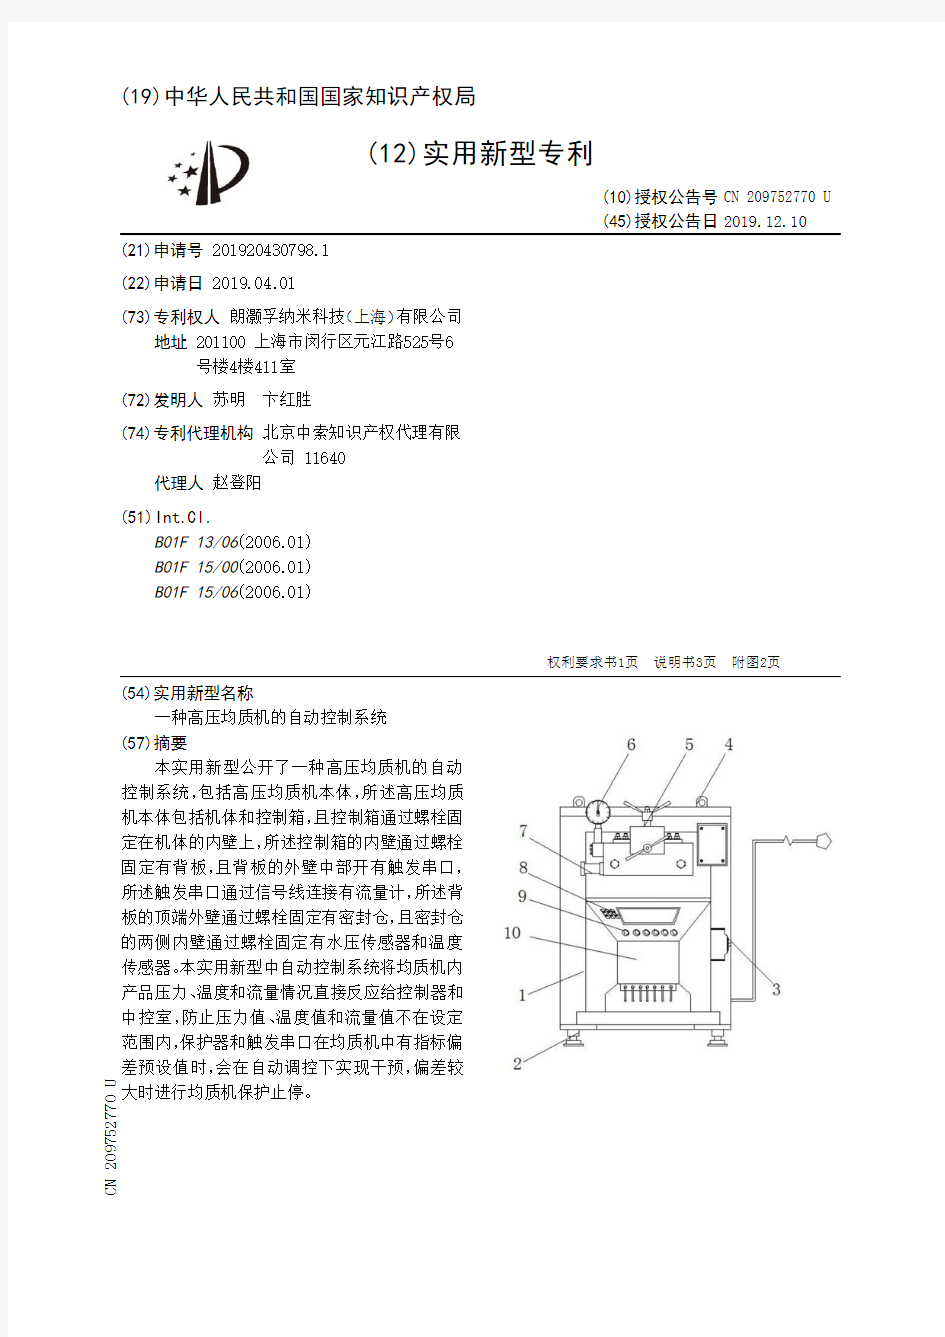 【CN209752770U】一种高压均质机的自动控制系统【专利】